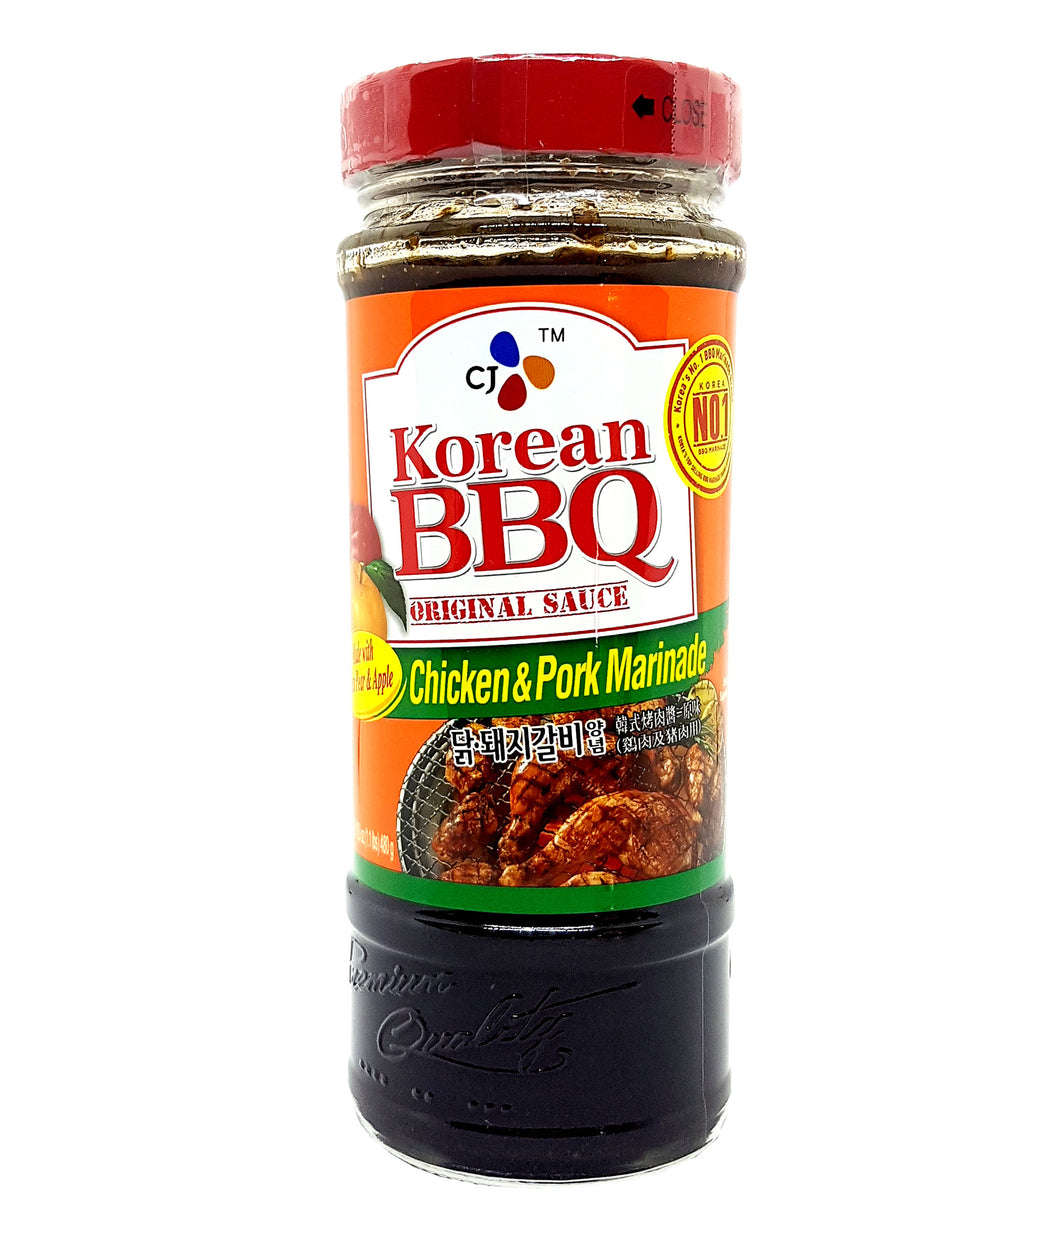 CJ Korean BBQ Sauce Chicken & Pork Marinade 17.6 Oz.